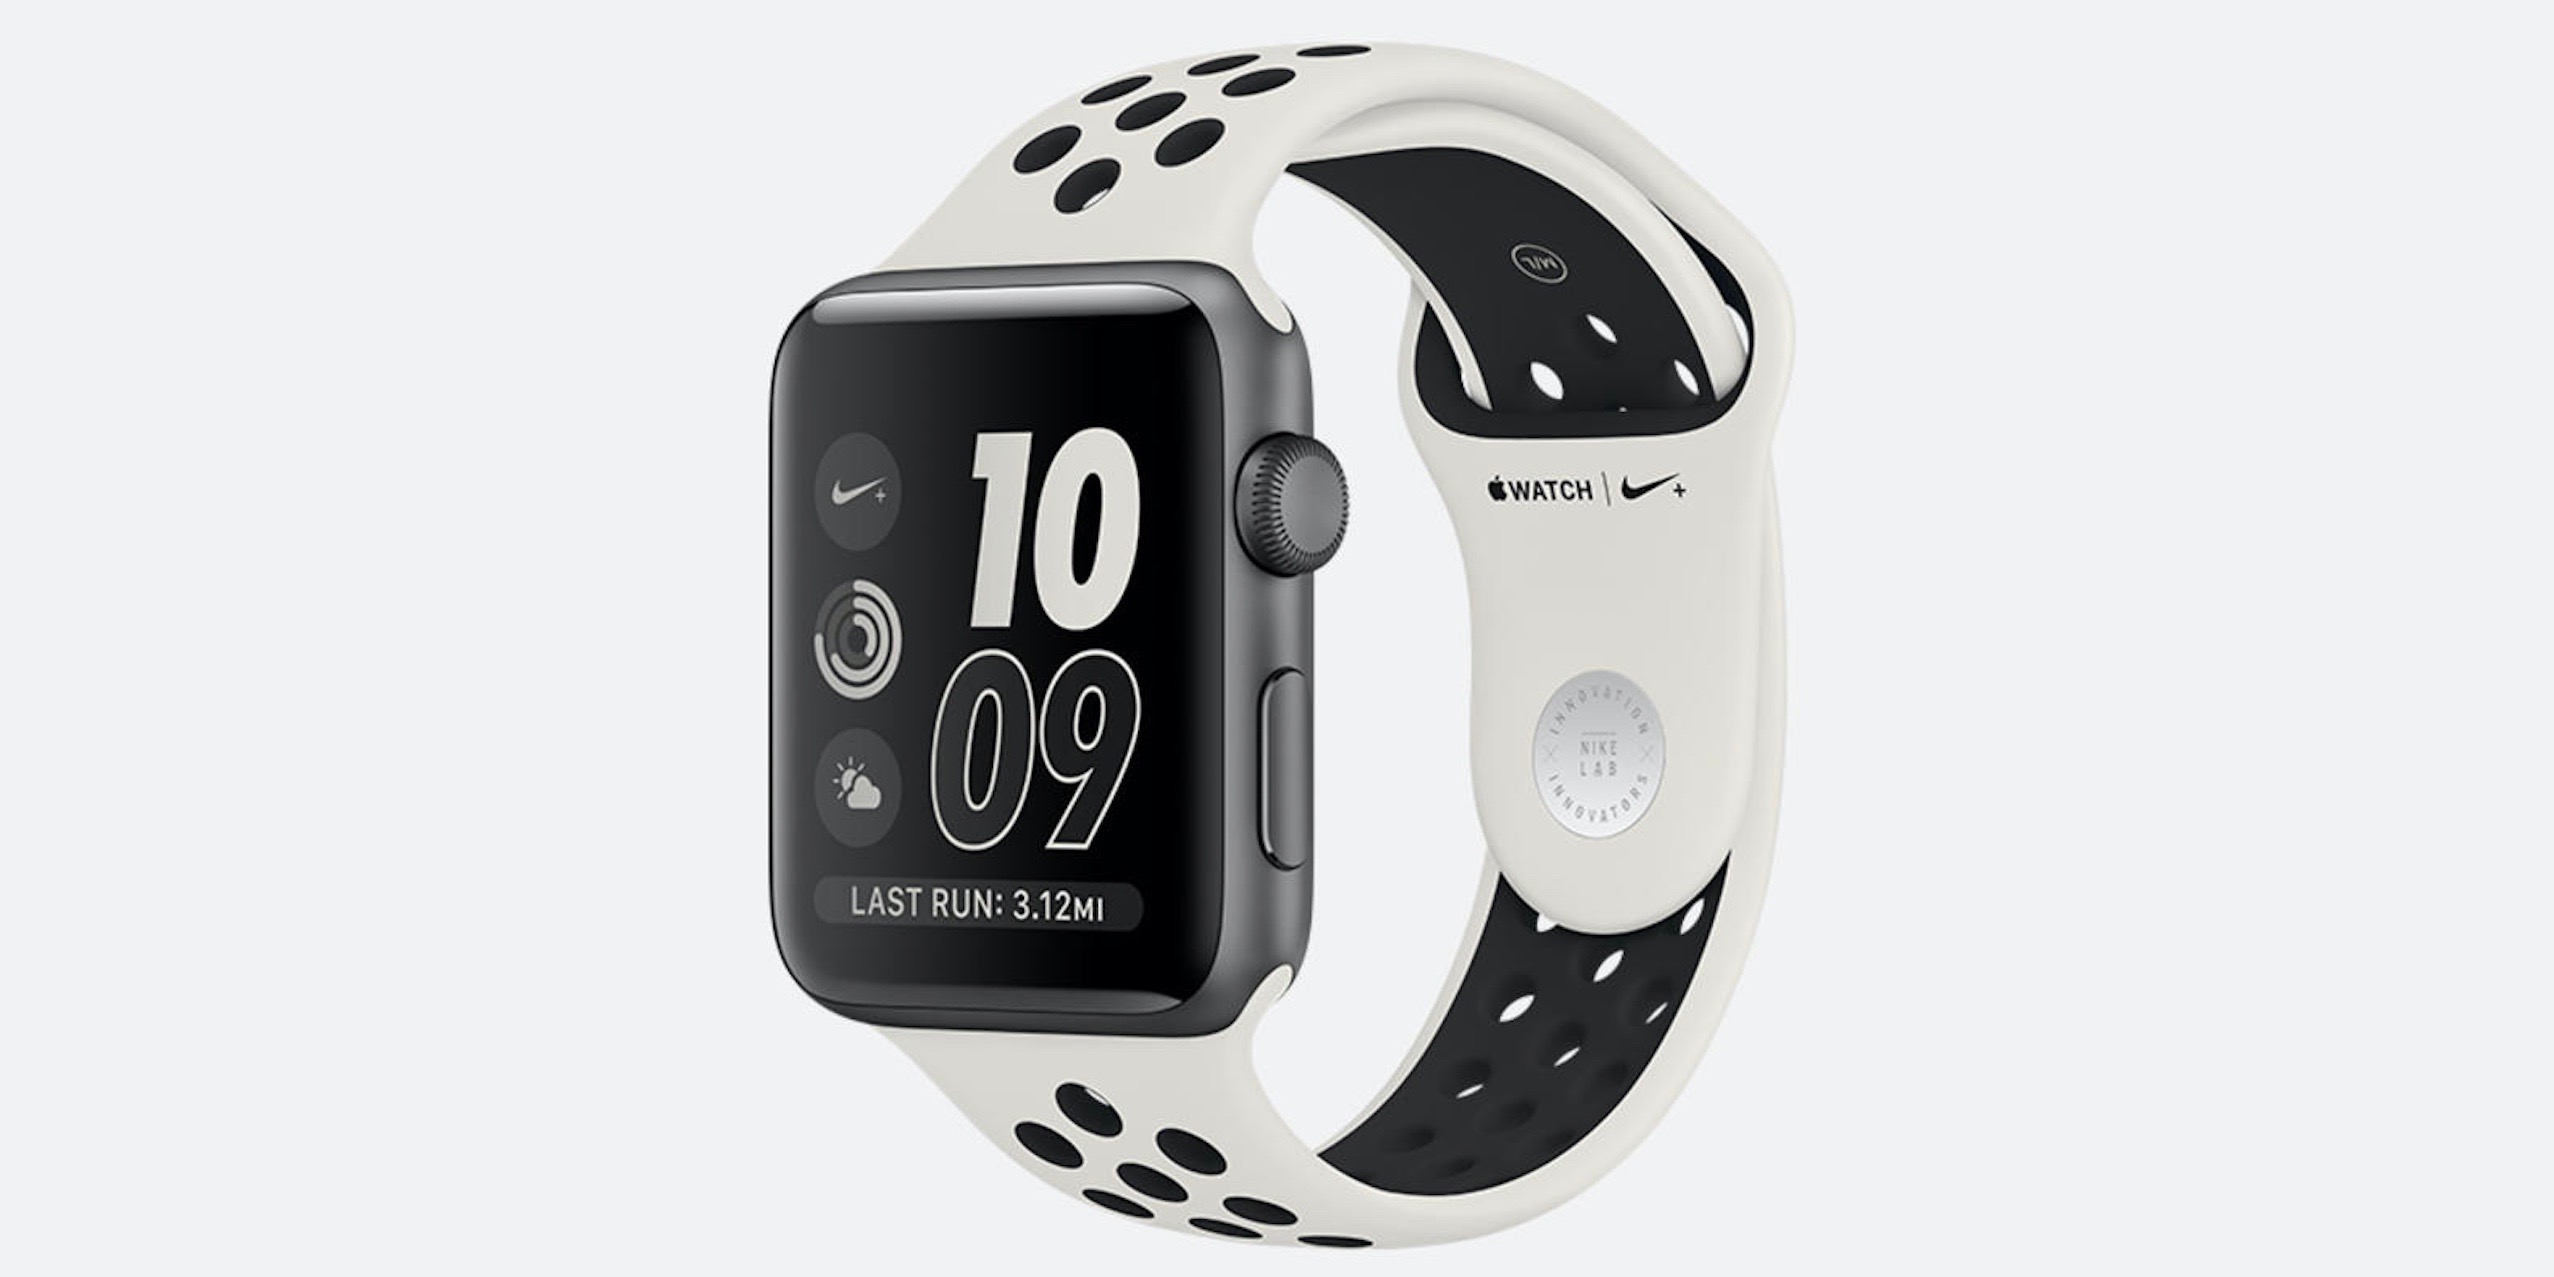 Nike launching new Apple Watch NikeLab style with Light Bone/Black band -  9to5Mac